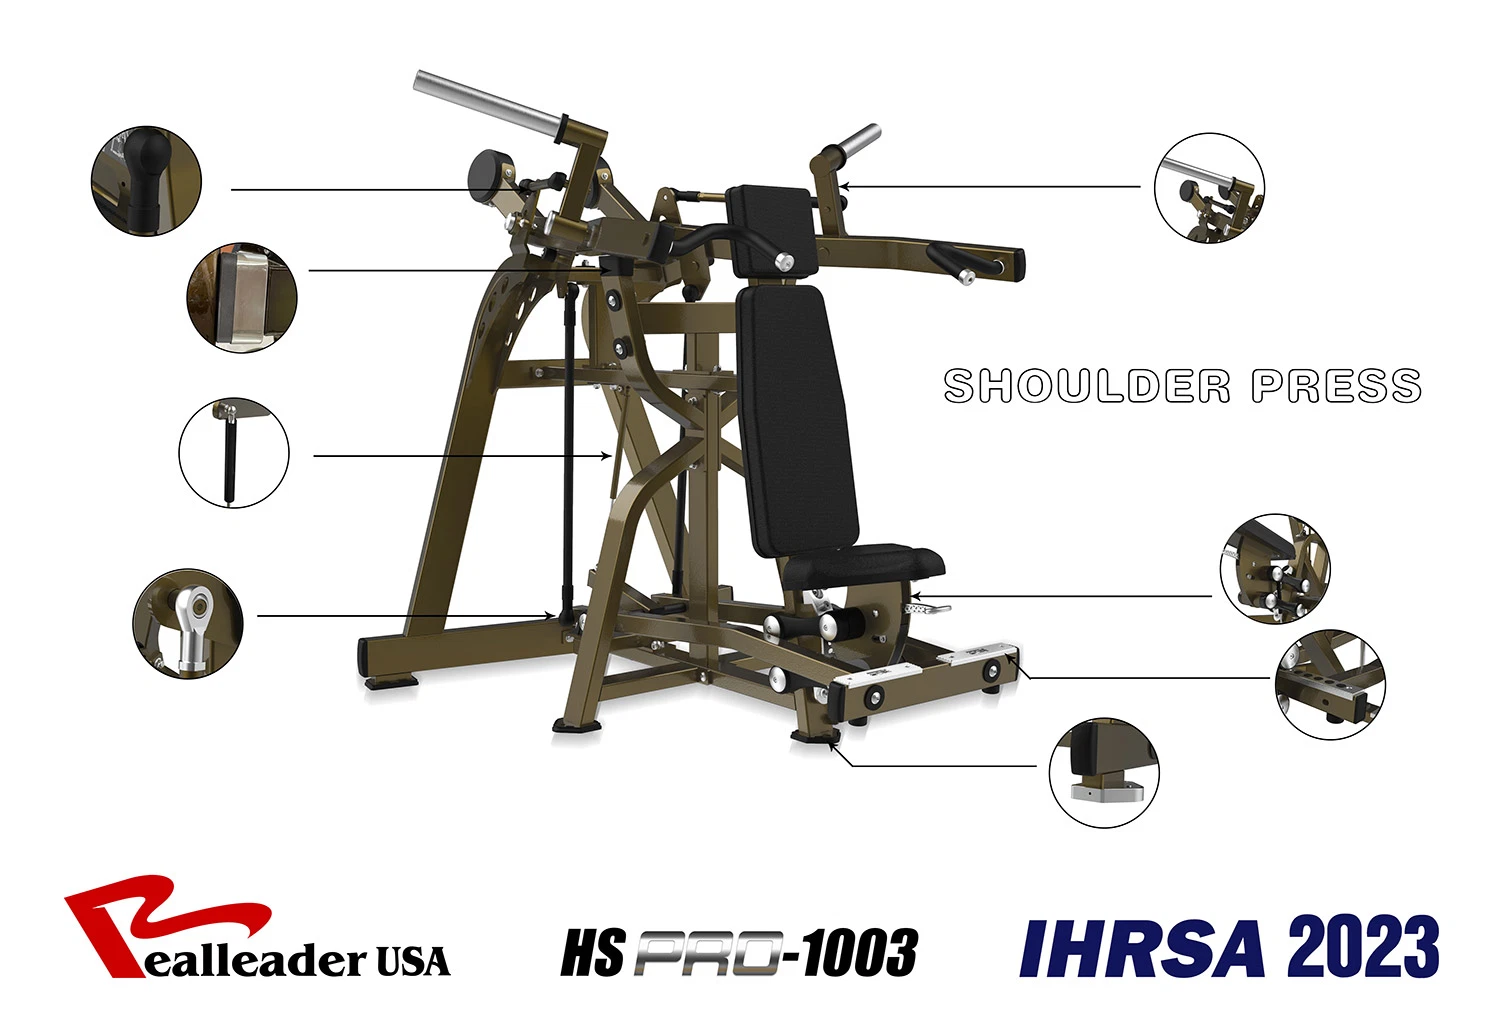 Body Building Gymnasium Commercial Use Gym Equipment Shoulder Press